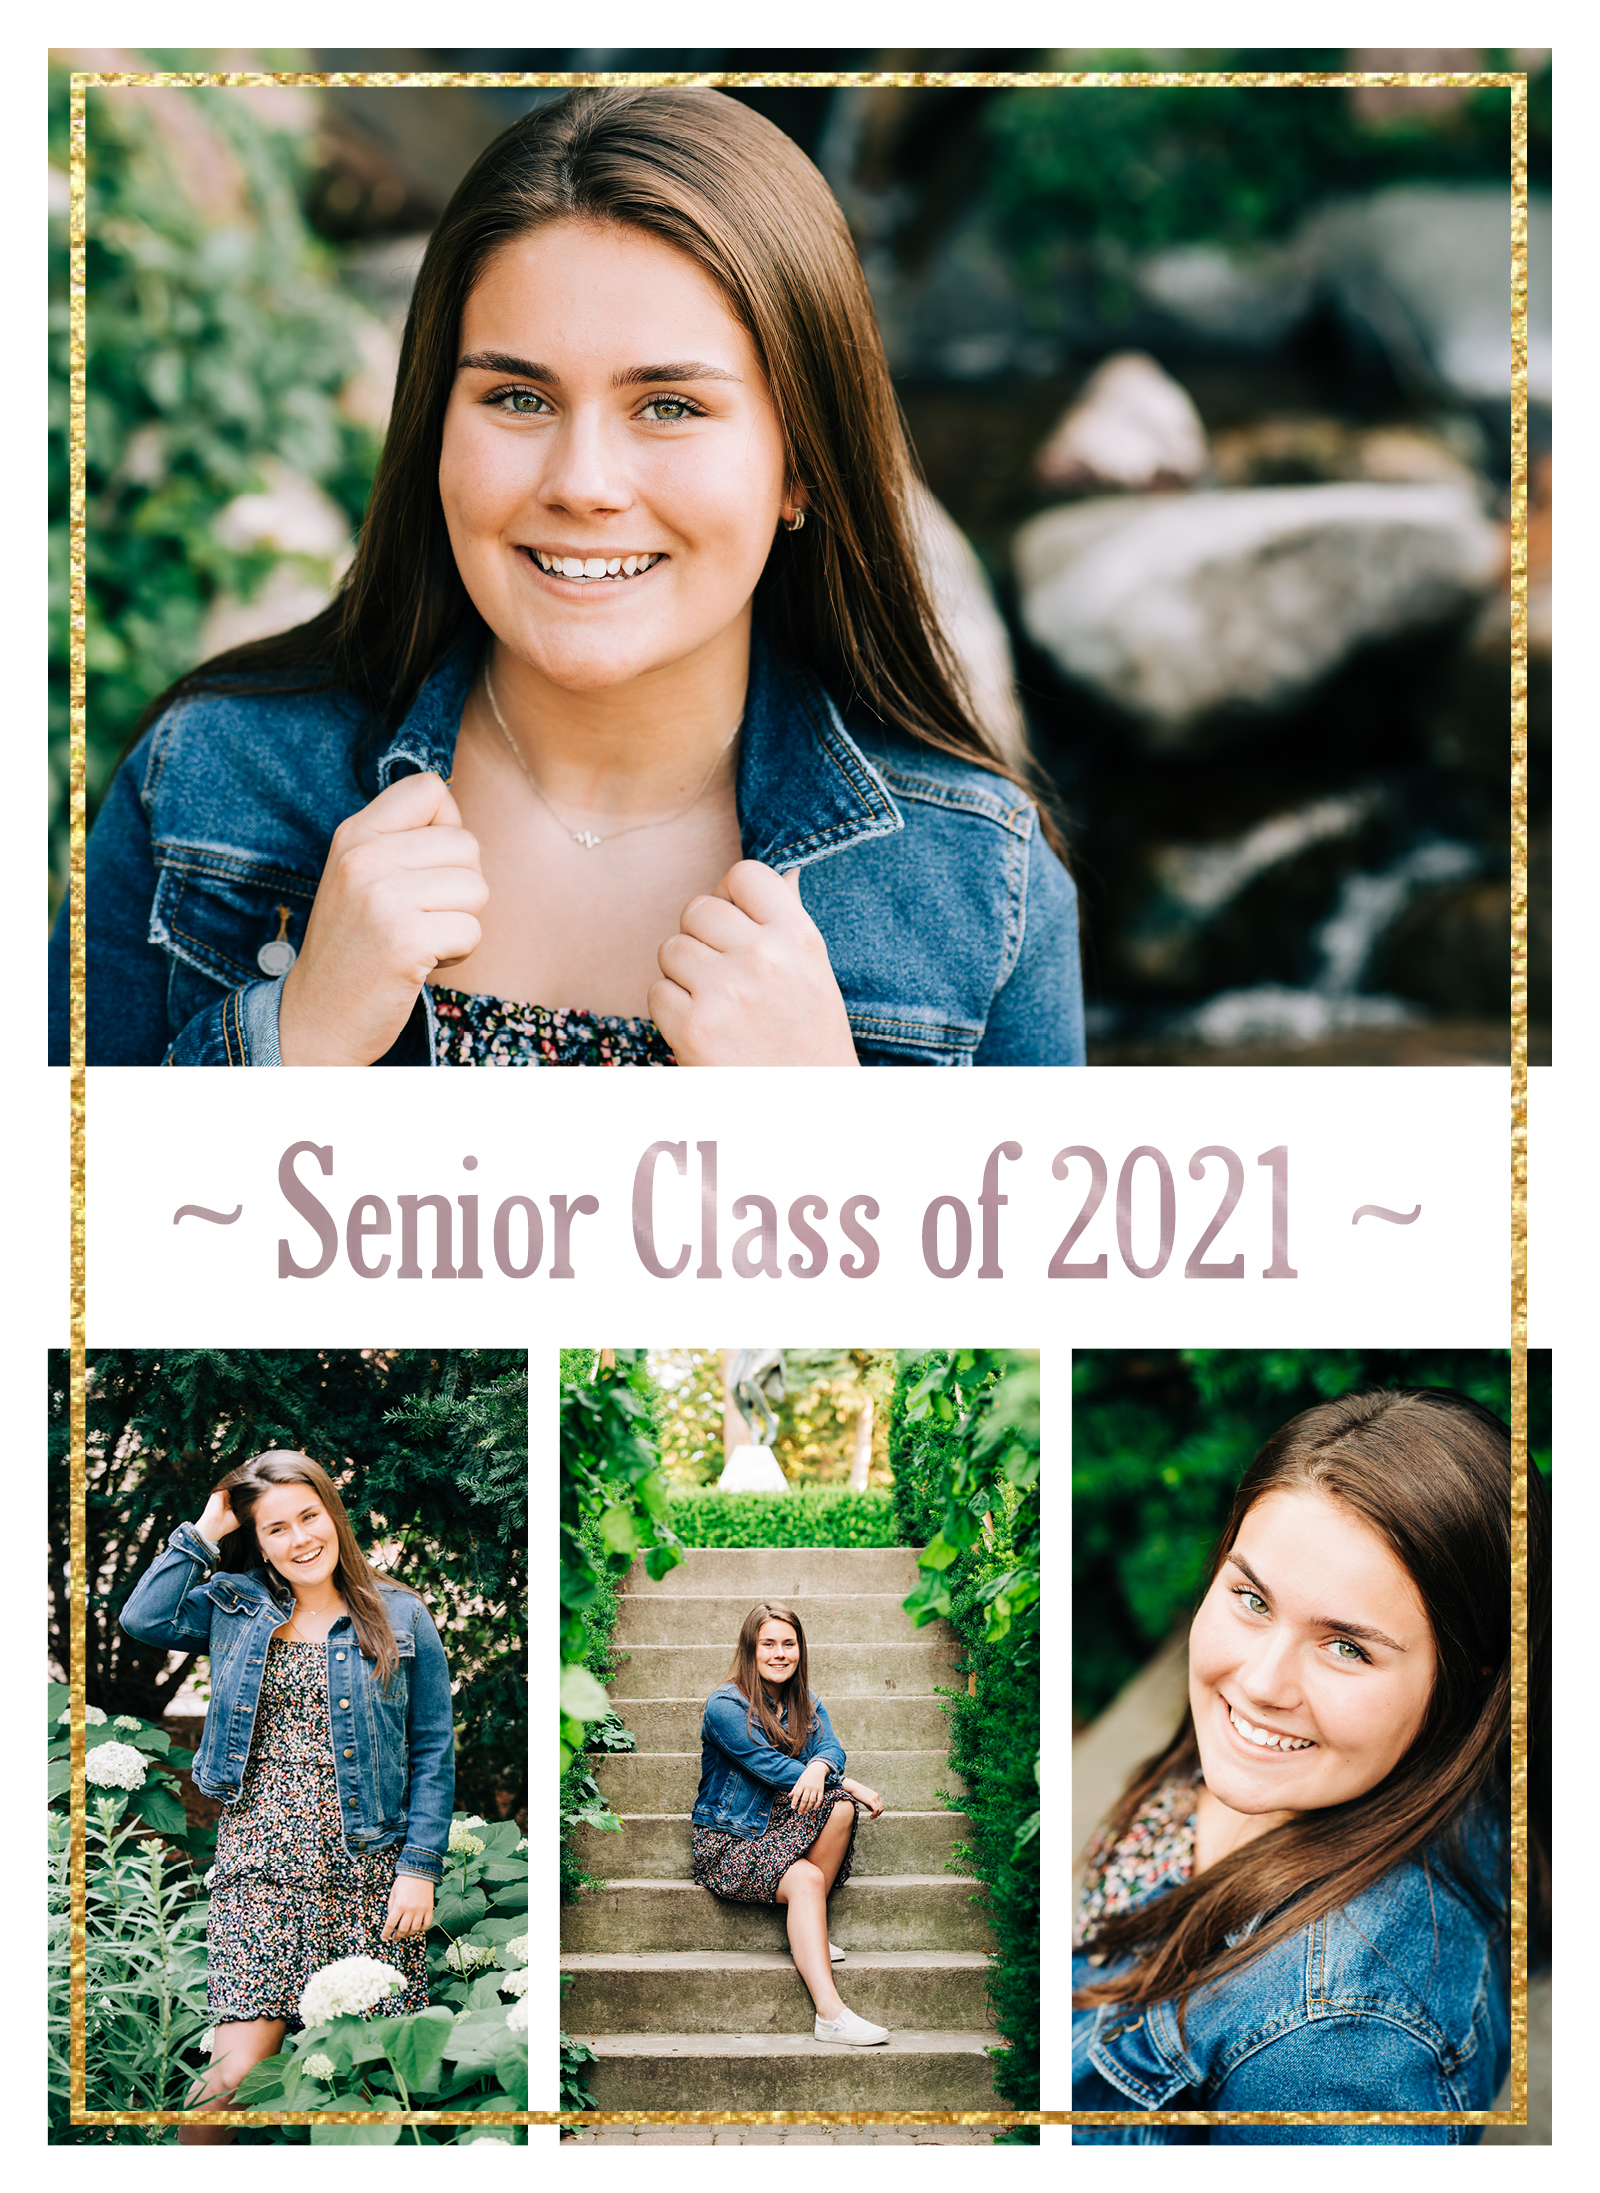 Senior Girl Picture Collage